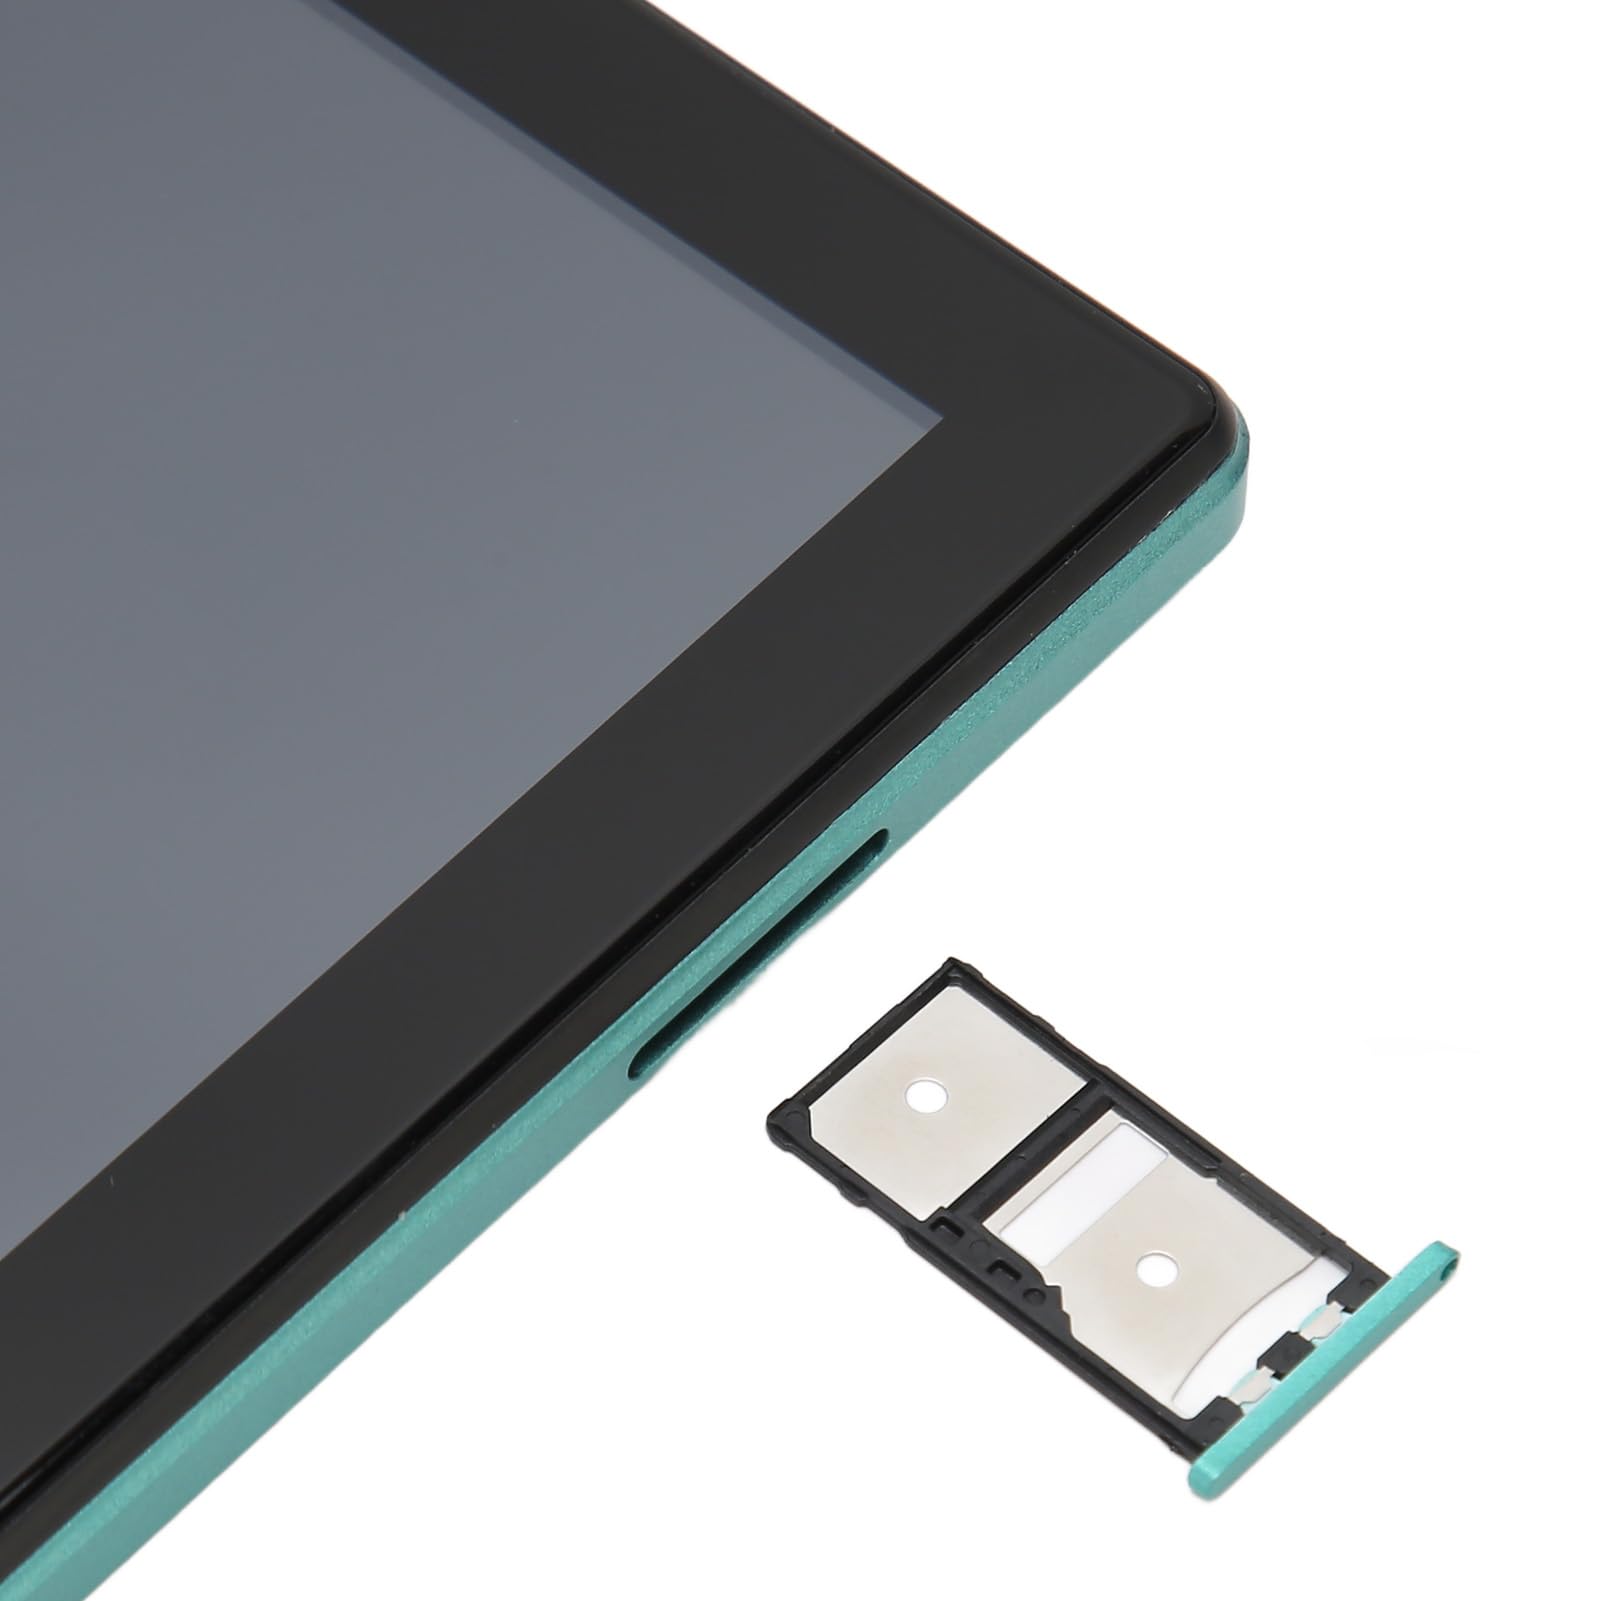 KUIDAMOS Gaming Tablet, Office Tablet 8GB RAM 256GB ROM 2 Card Slots Aluminium Alloy 5G WiFi 4G LTE for Travel (US Plug)